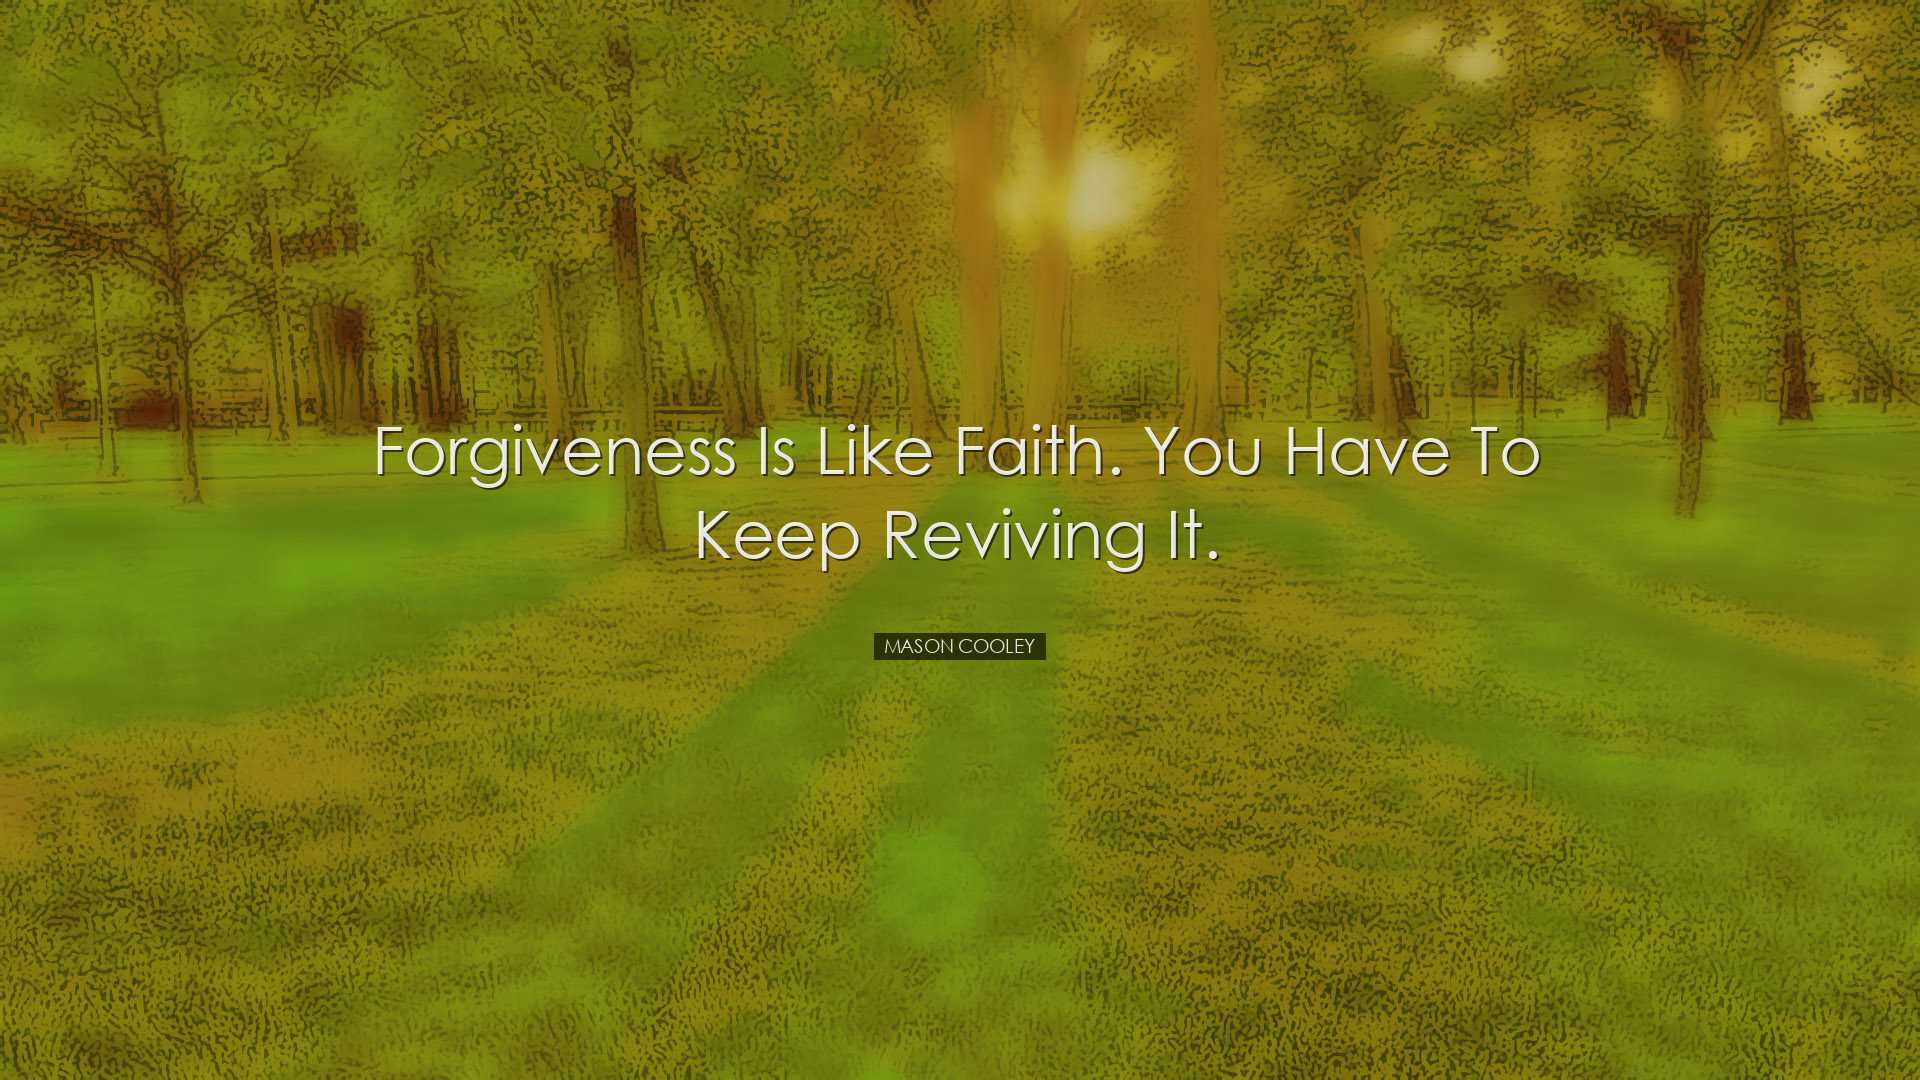 Forgiveness is like faith. You have to keep reviving it. - Mason C